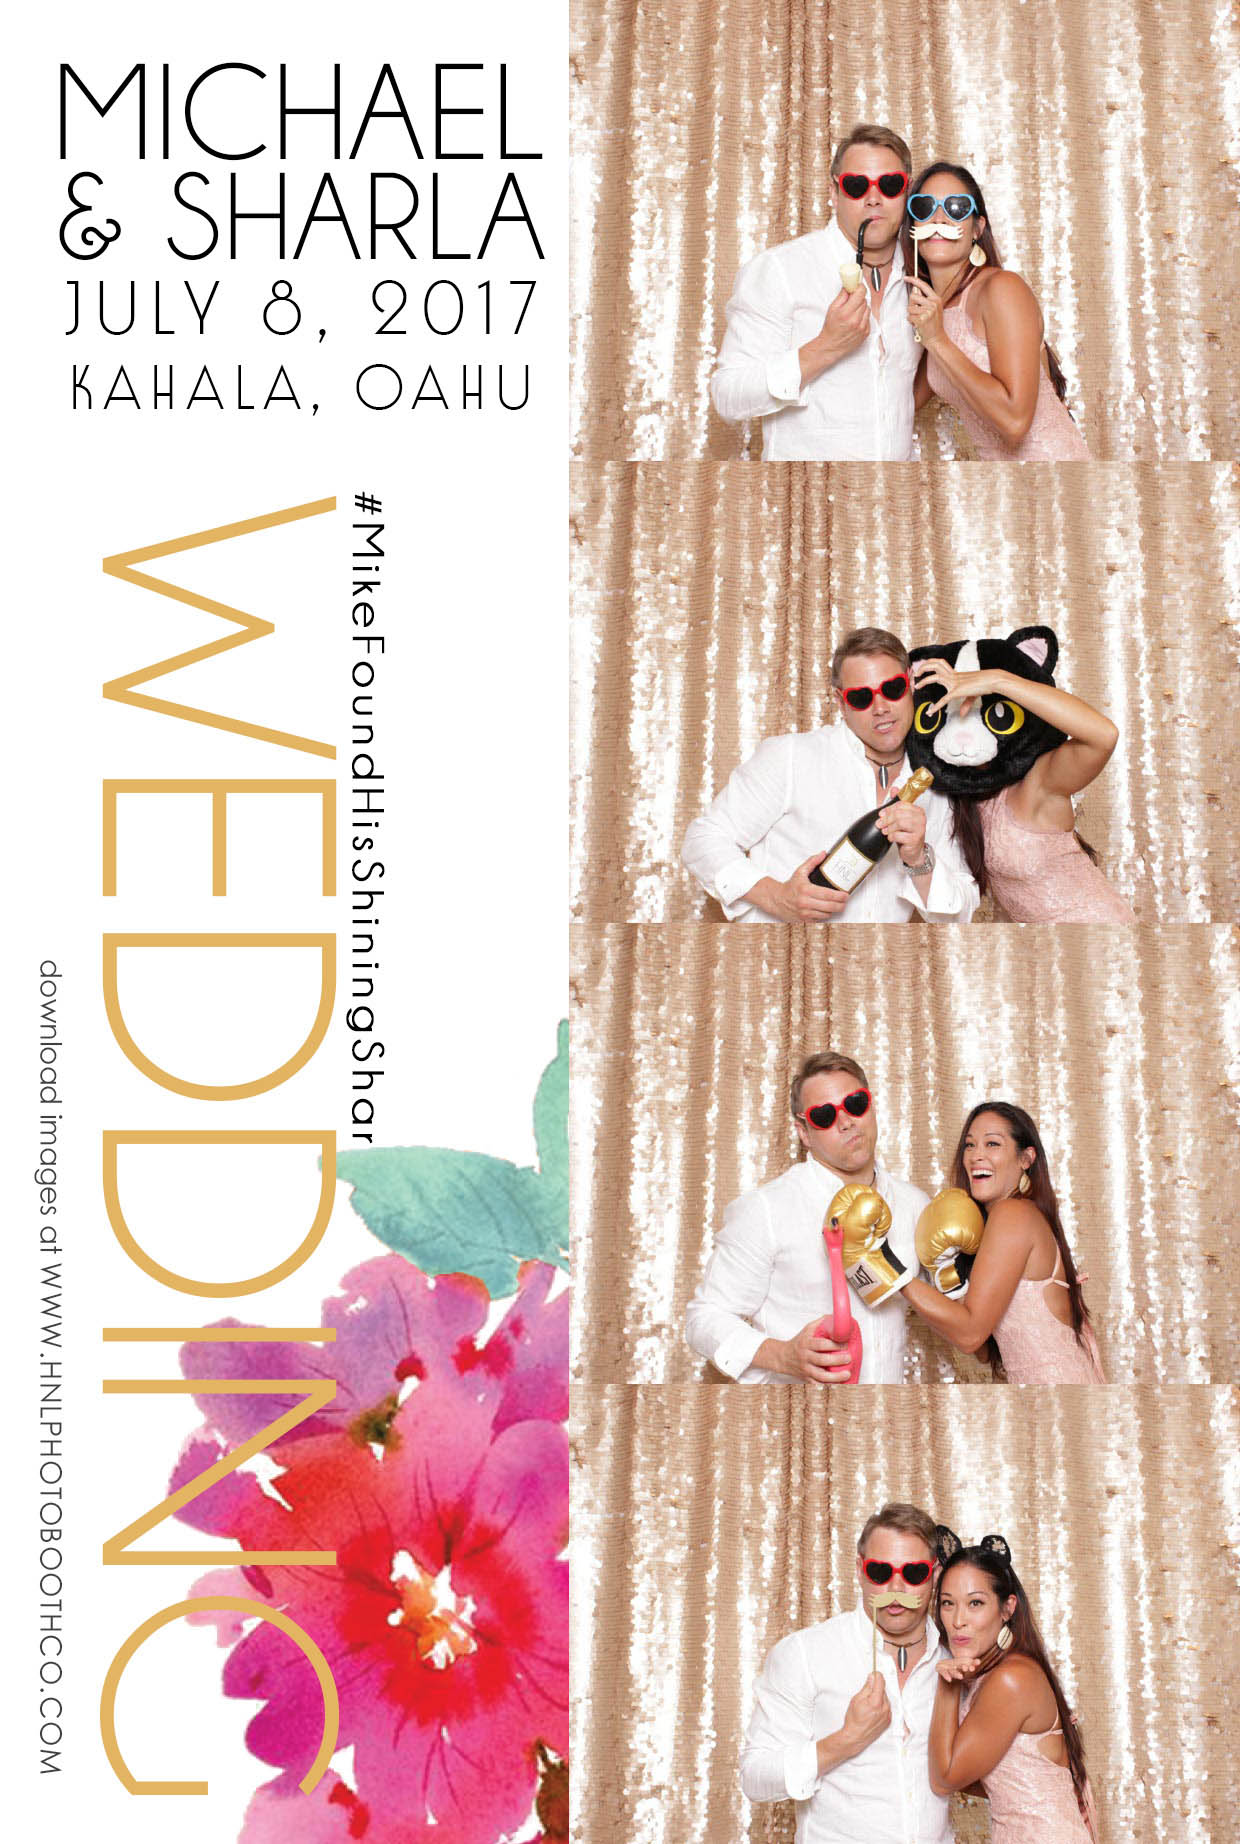 Sharla and Michael Wedding Maile Ballroom and Foyer Kahala Hotel and Resort Oahu Hawaii Photo Booth-6.jpg